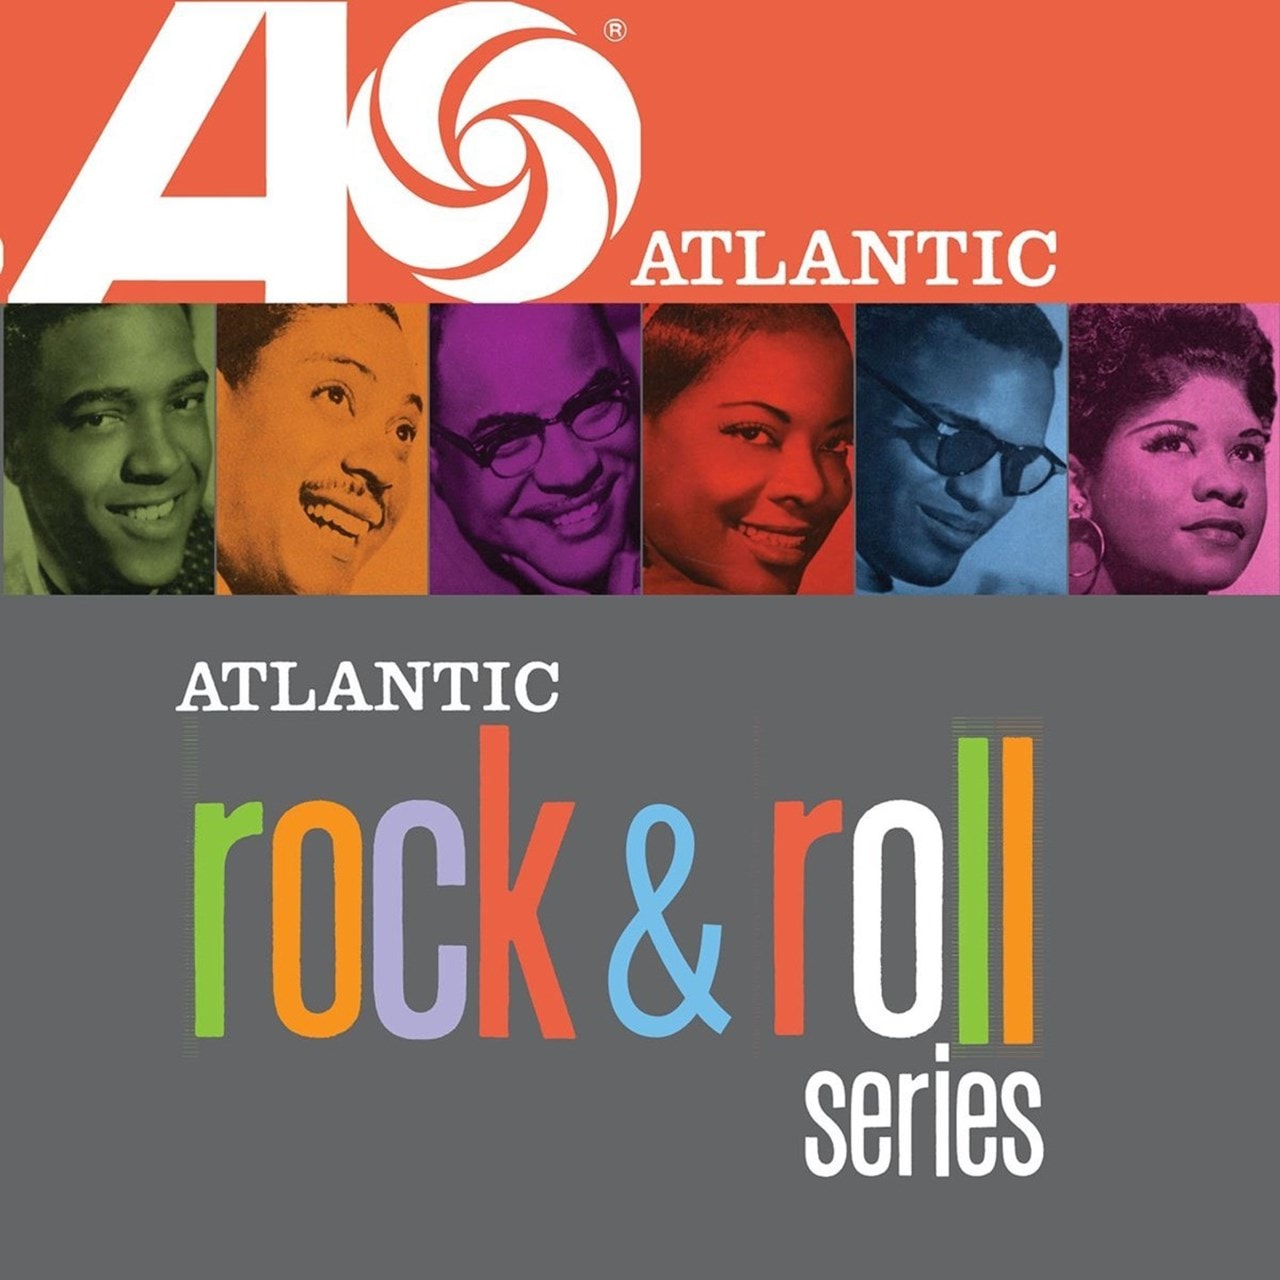 Atlantic Rock & Roll Series CD Box Set Free shipping over £20 HMV